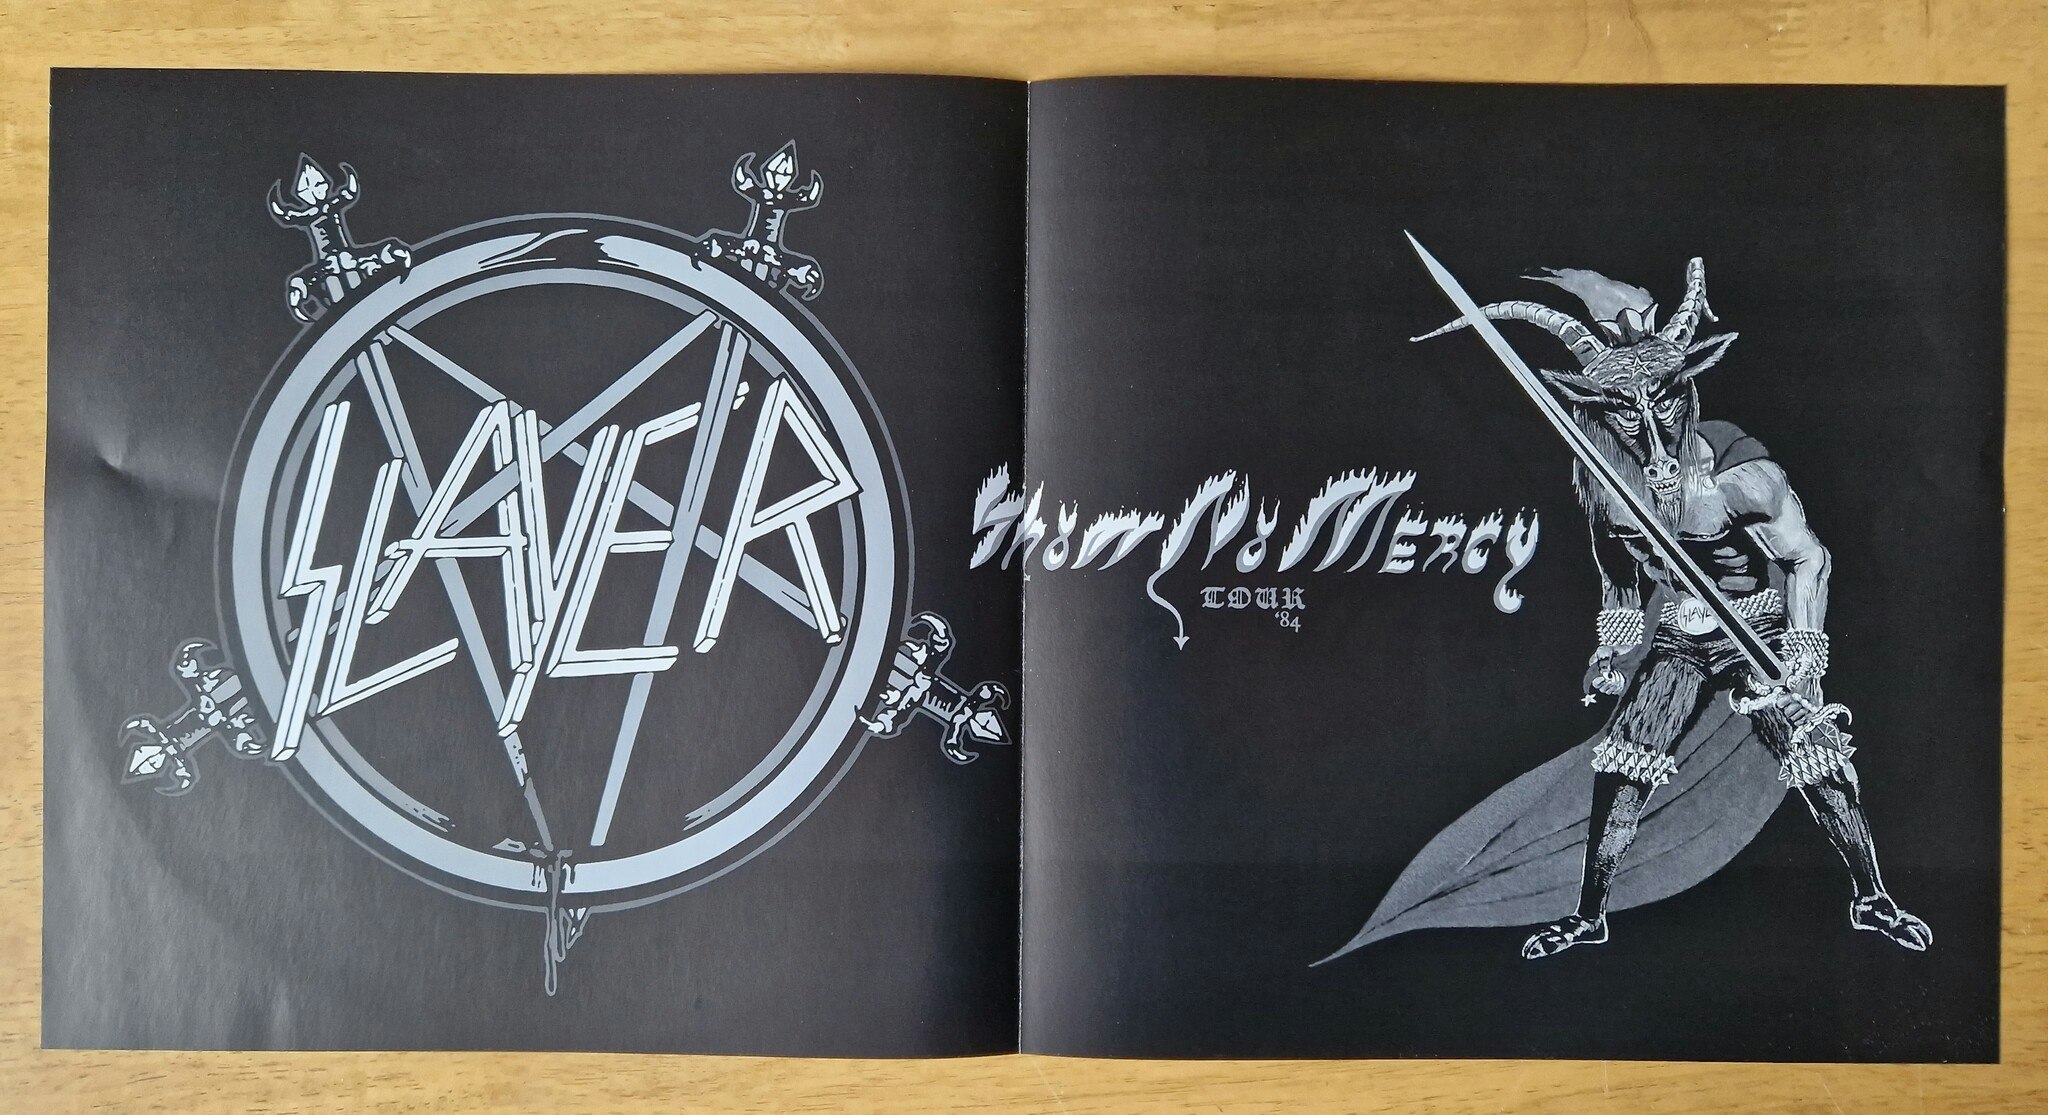 Slayer, Show no mercy tour. Vinyl LP